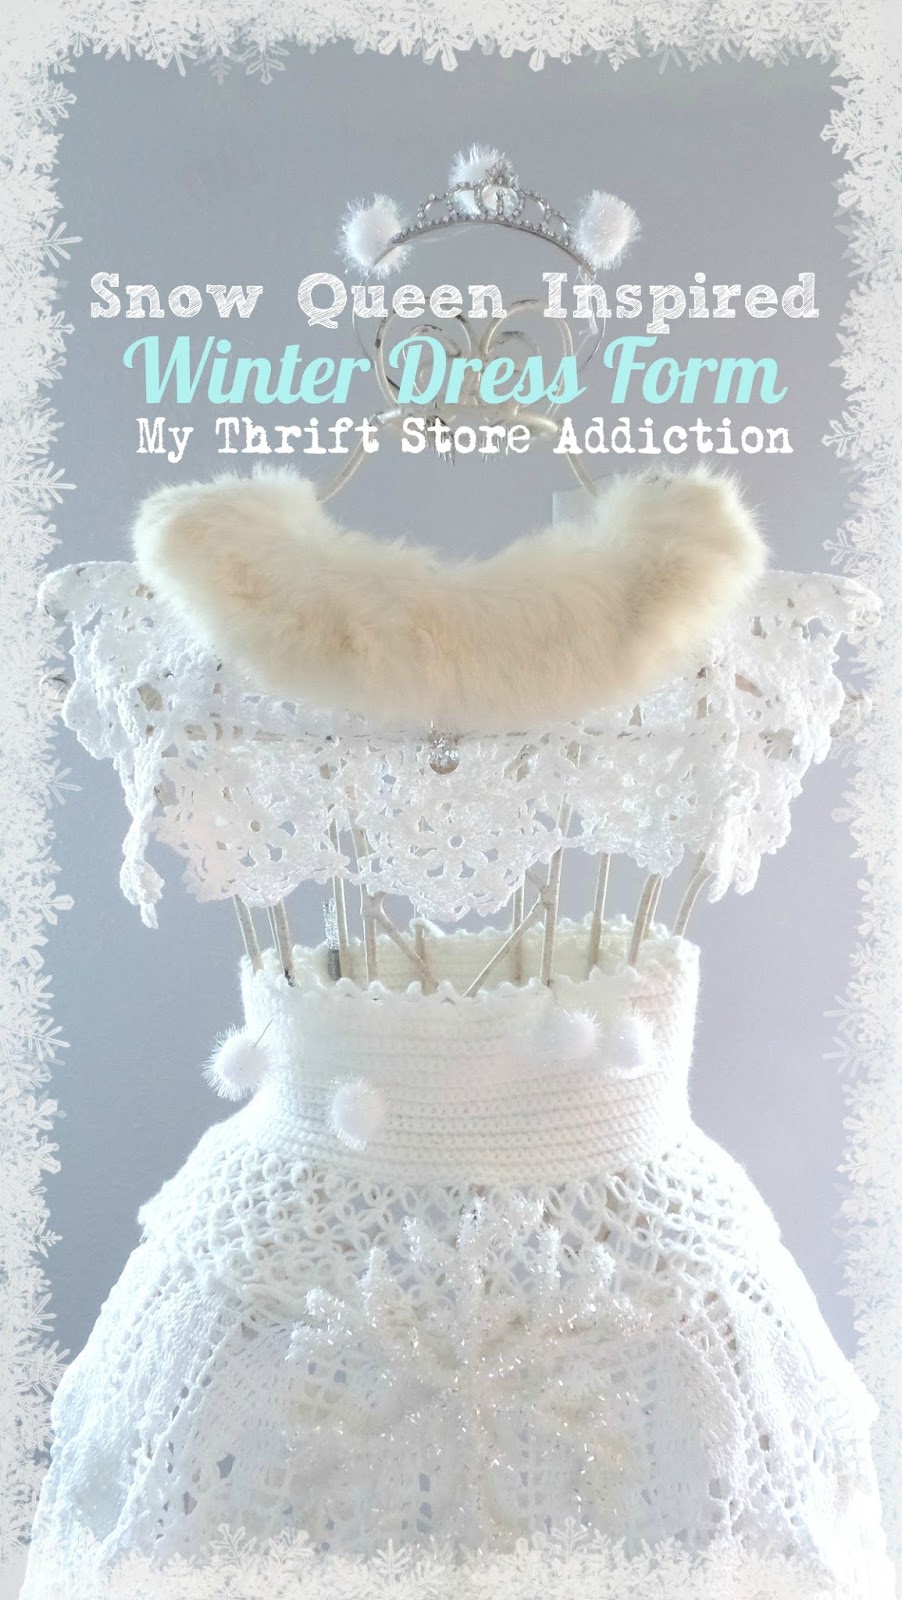 Snow Queen winter dress form